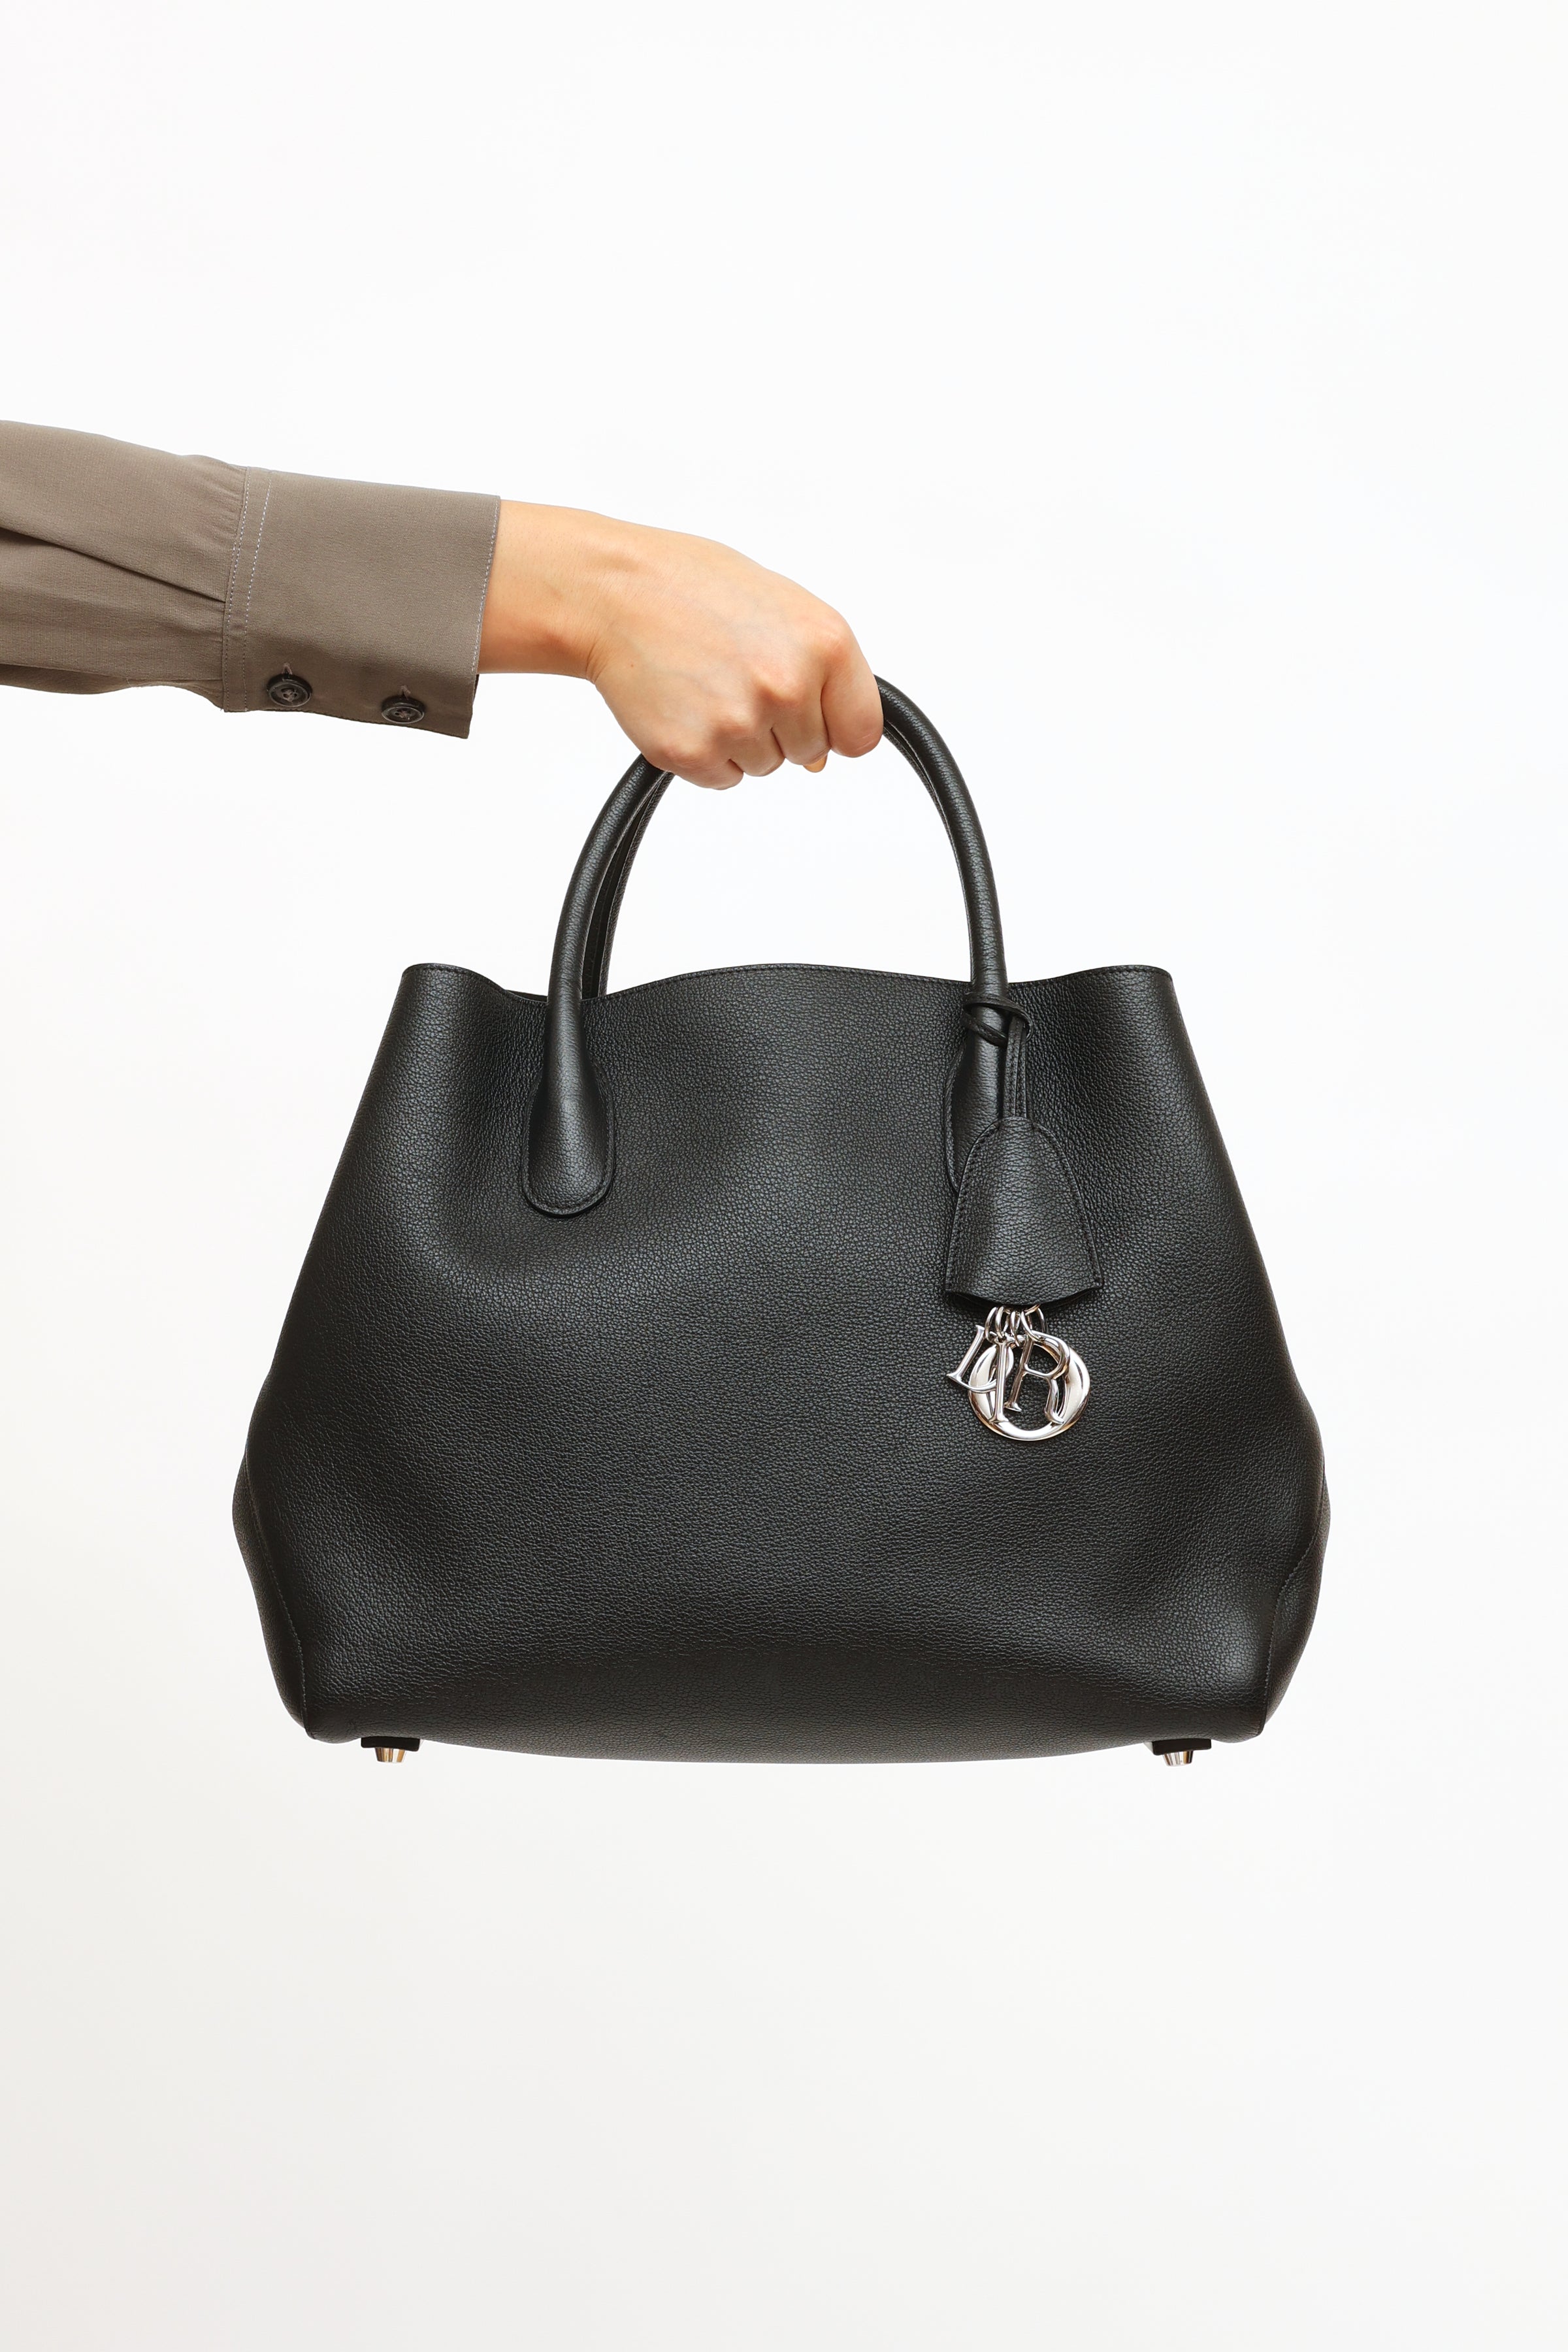 Christian Dior Bar Bag Spring 2013  Cheap louis vuitton handbags Dior  Fashion designer handbags